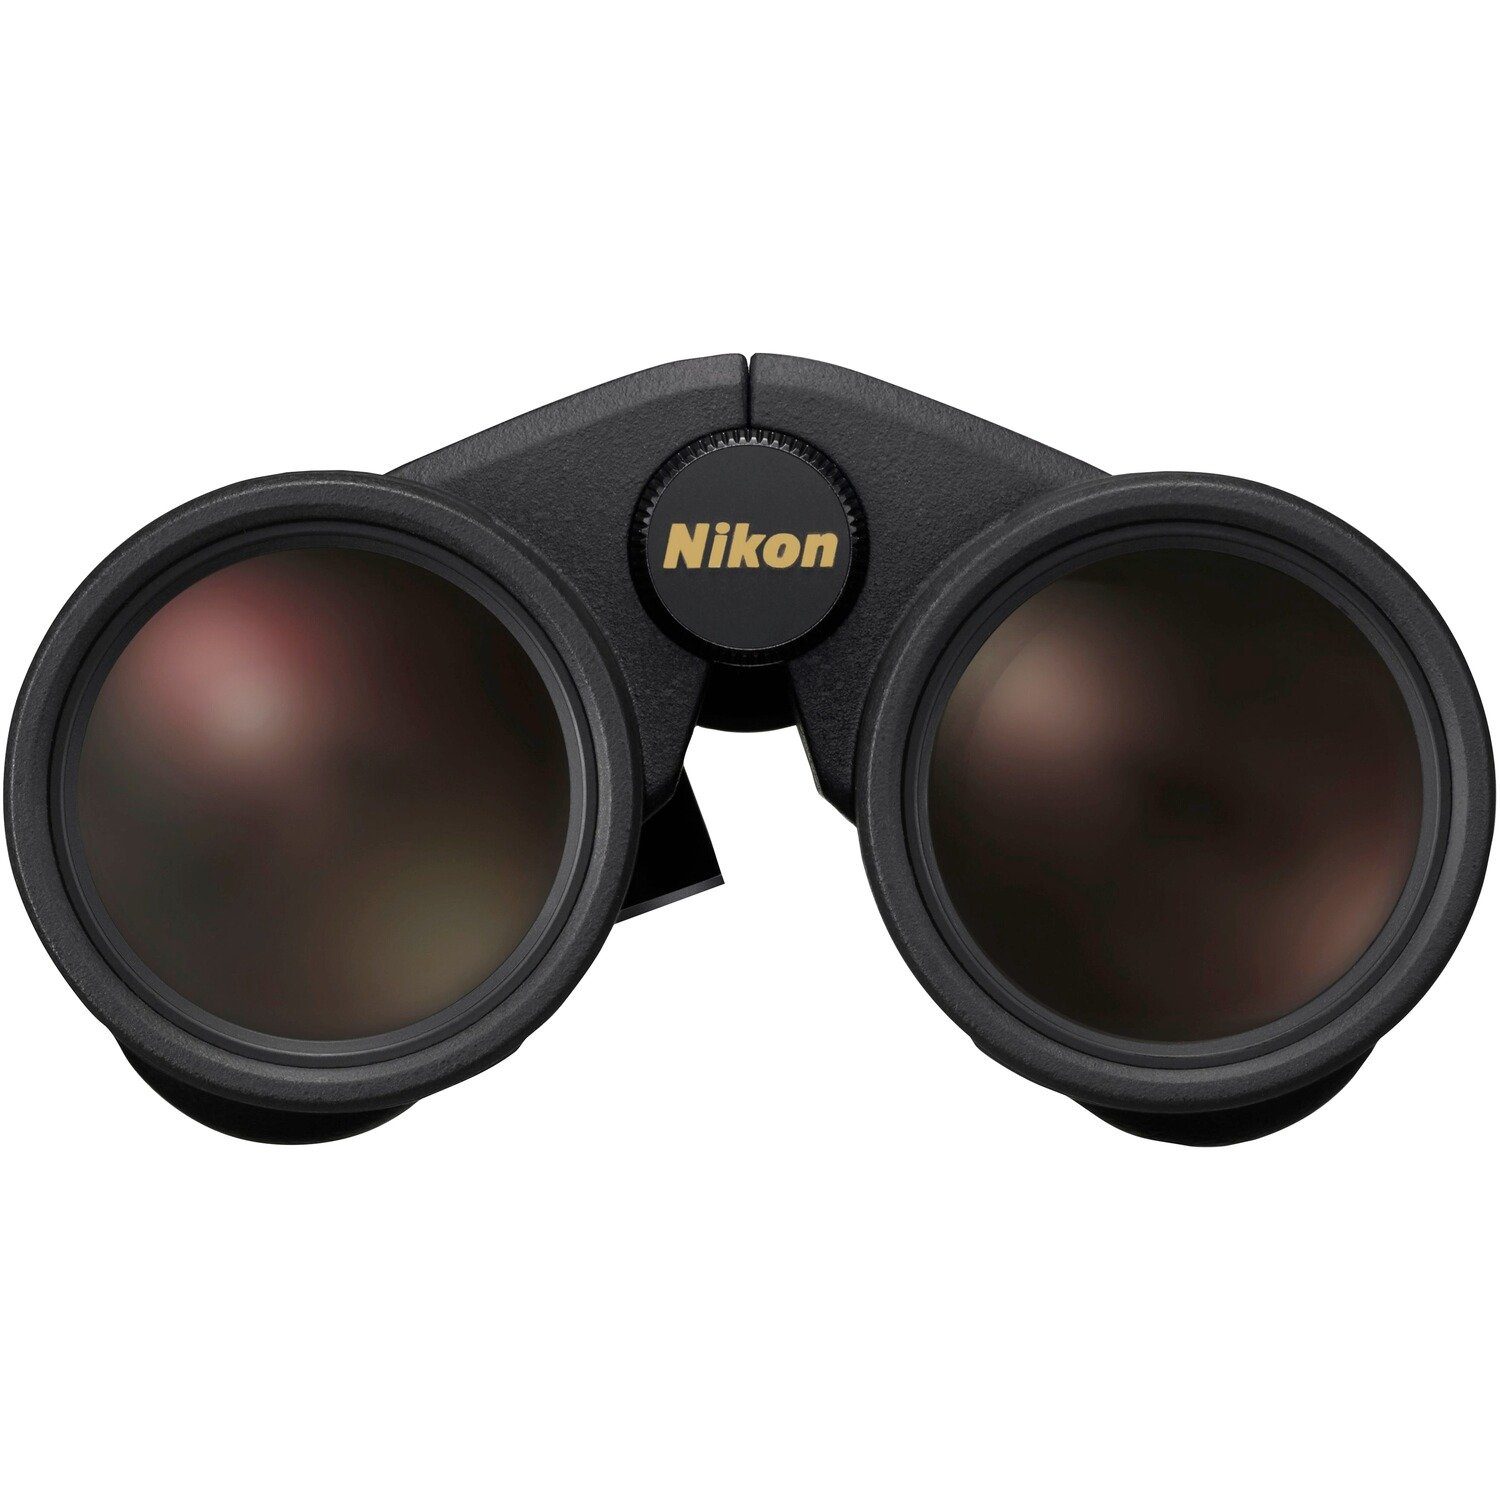 Entfernungsmesser 10x42 Fernglas mit Fernglas Laserforce Nikon